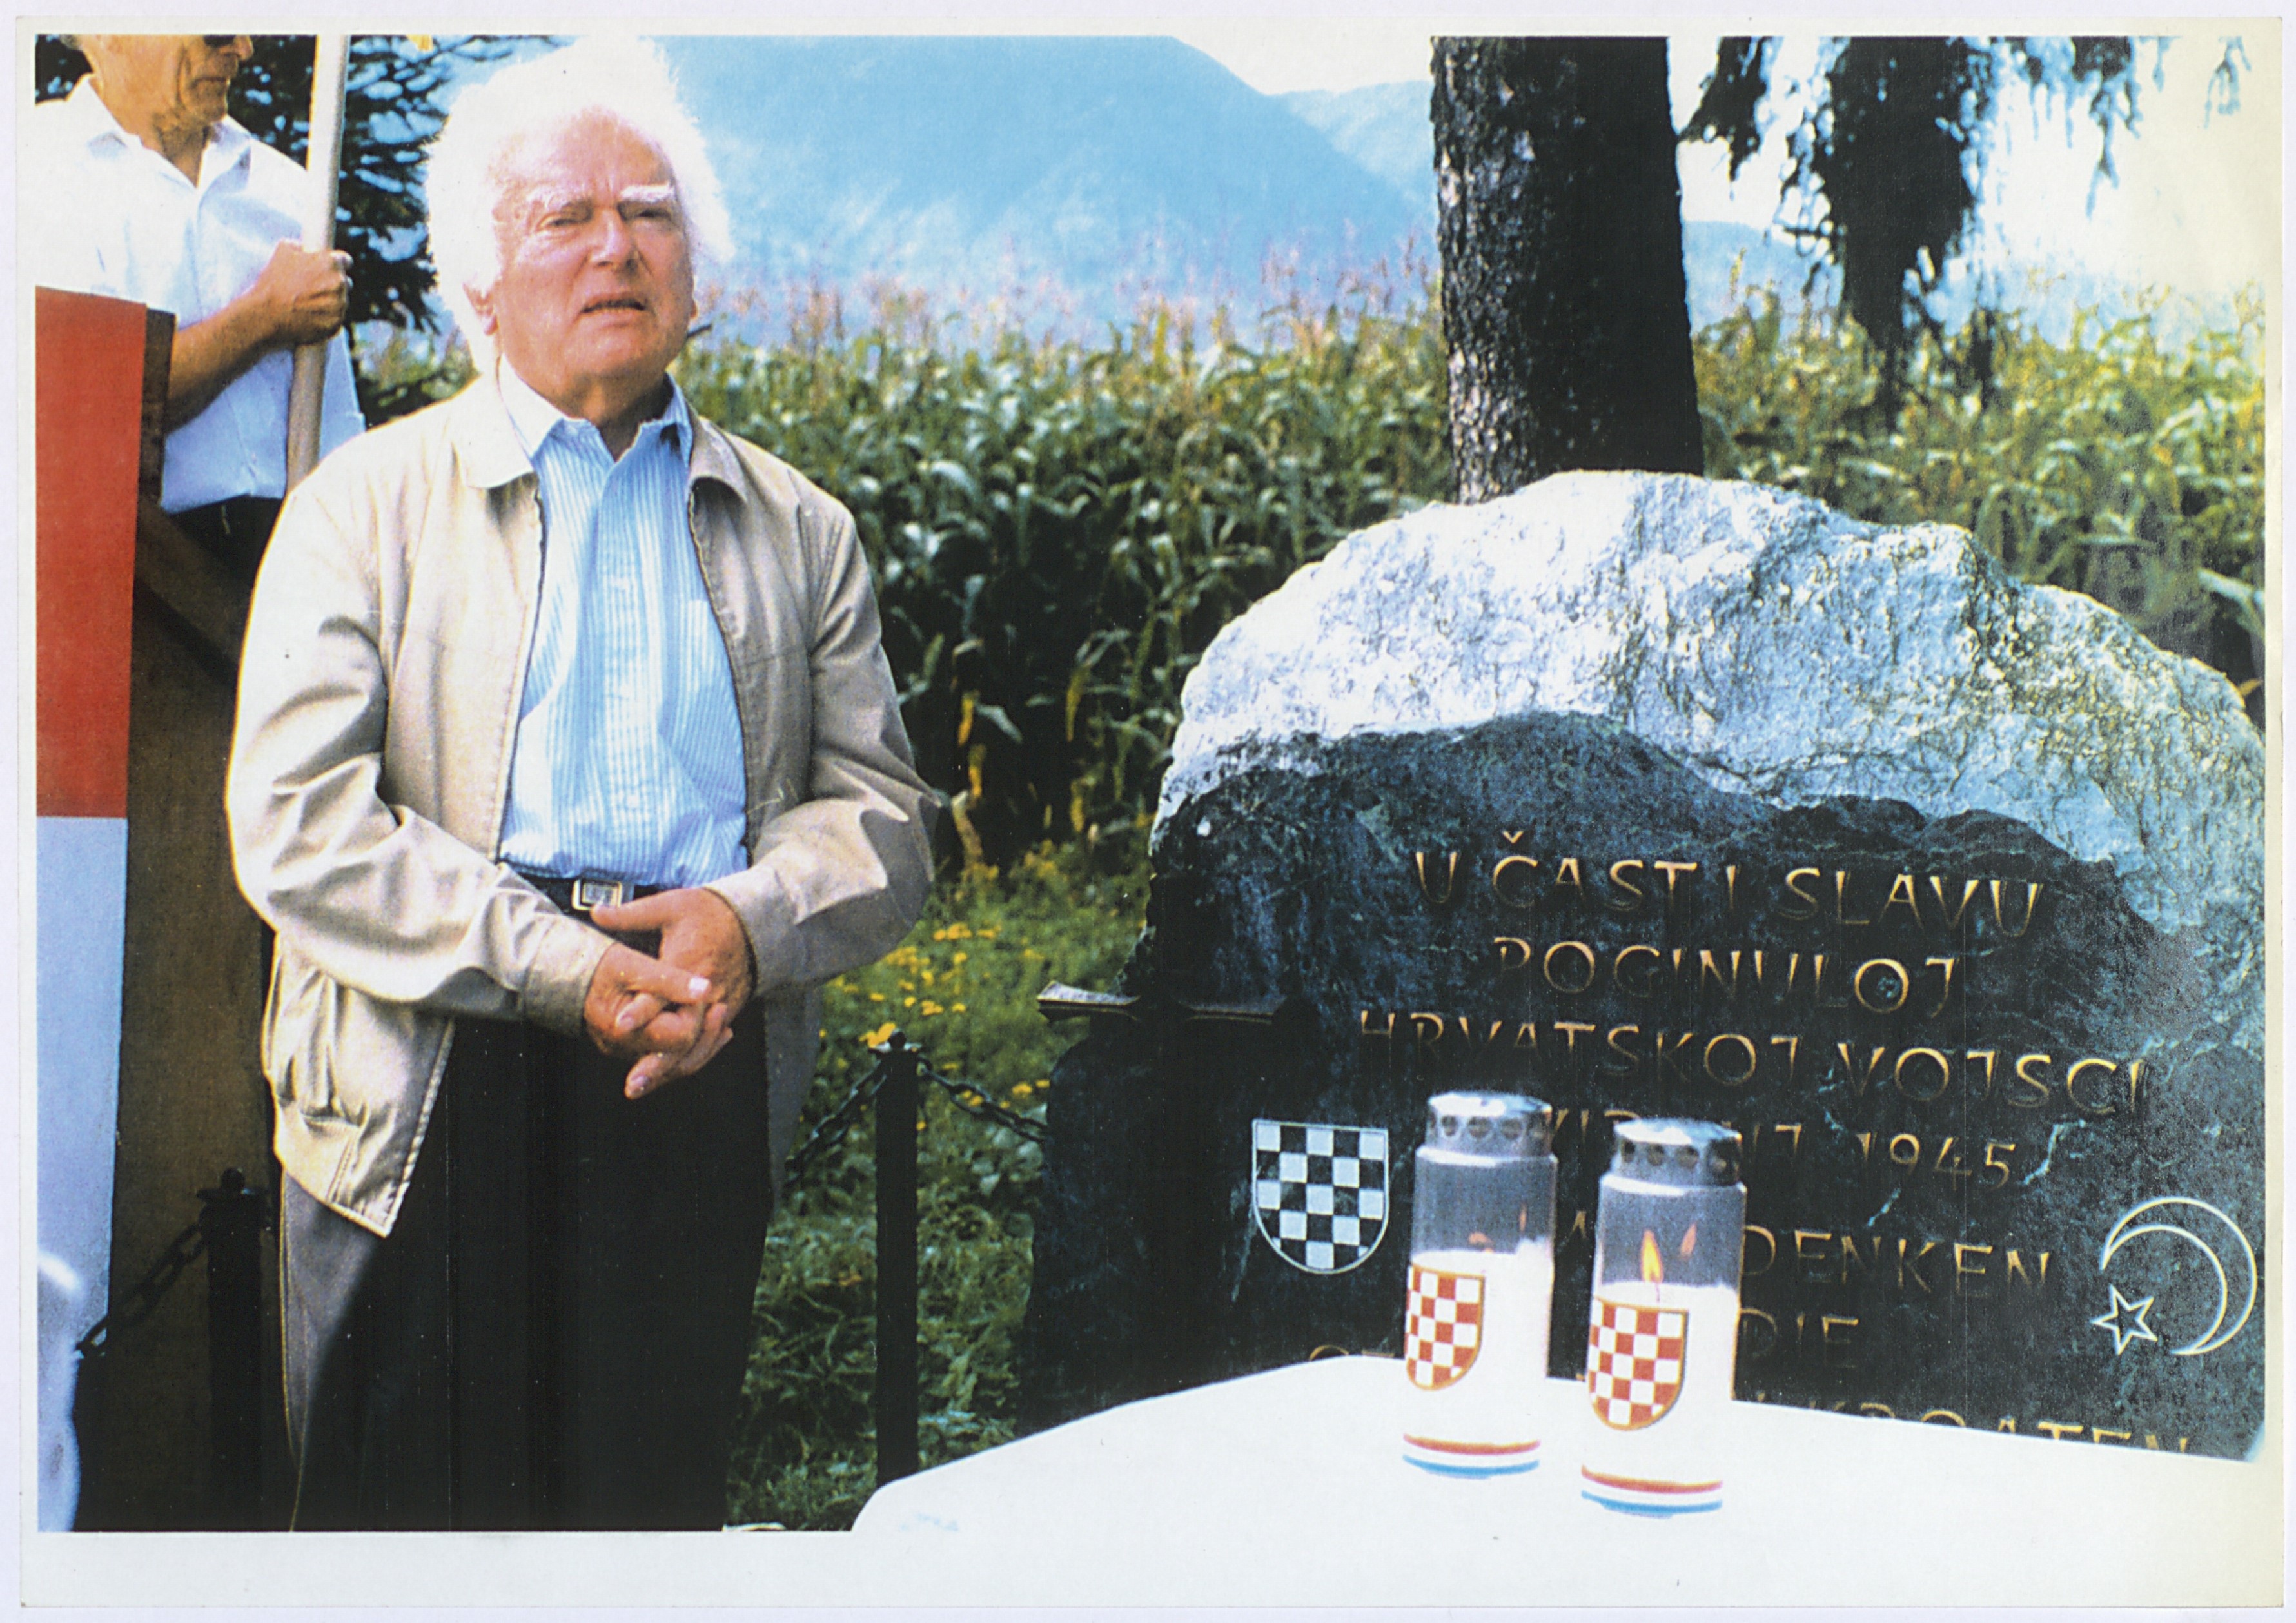 Vinko Nikolić at the Bleiburg commemoration in the 1980s